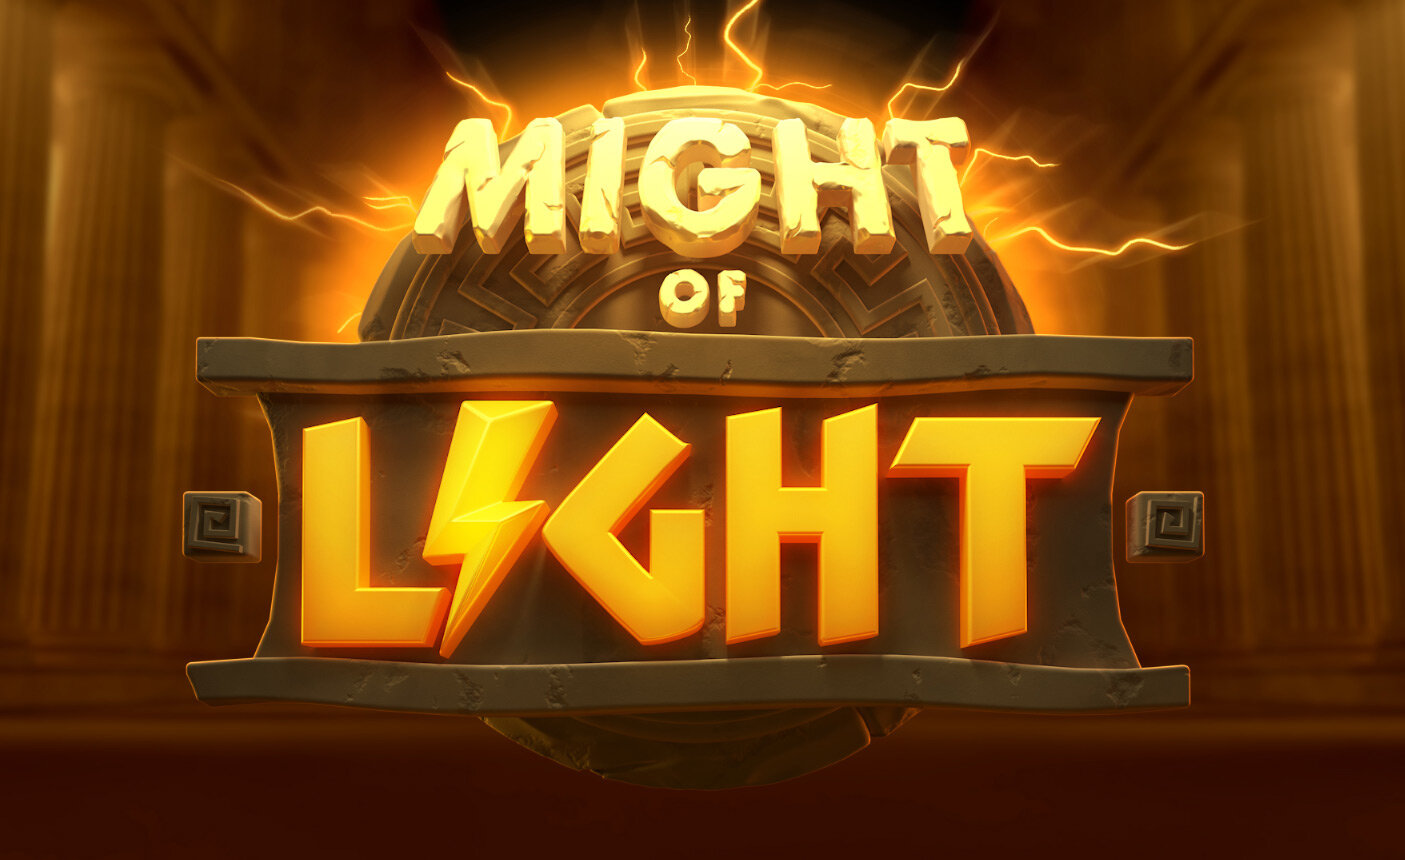 Might of Light